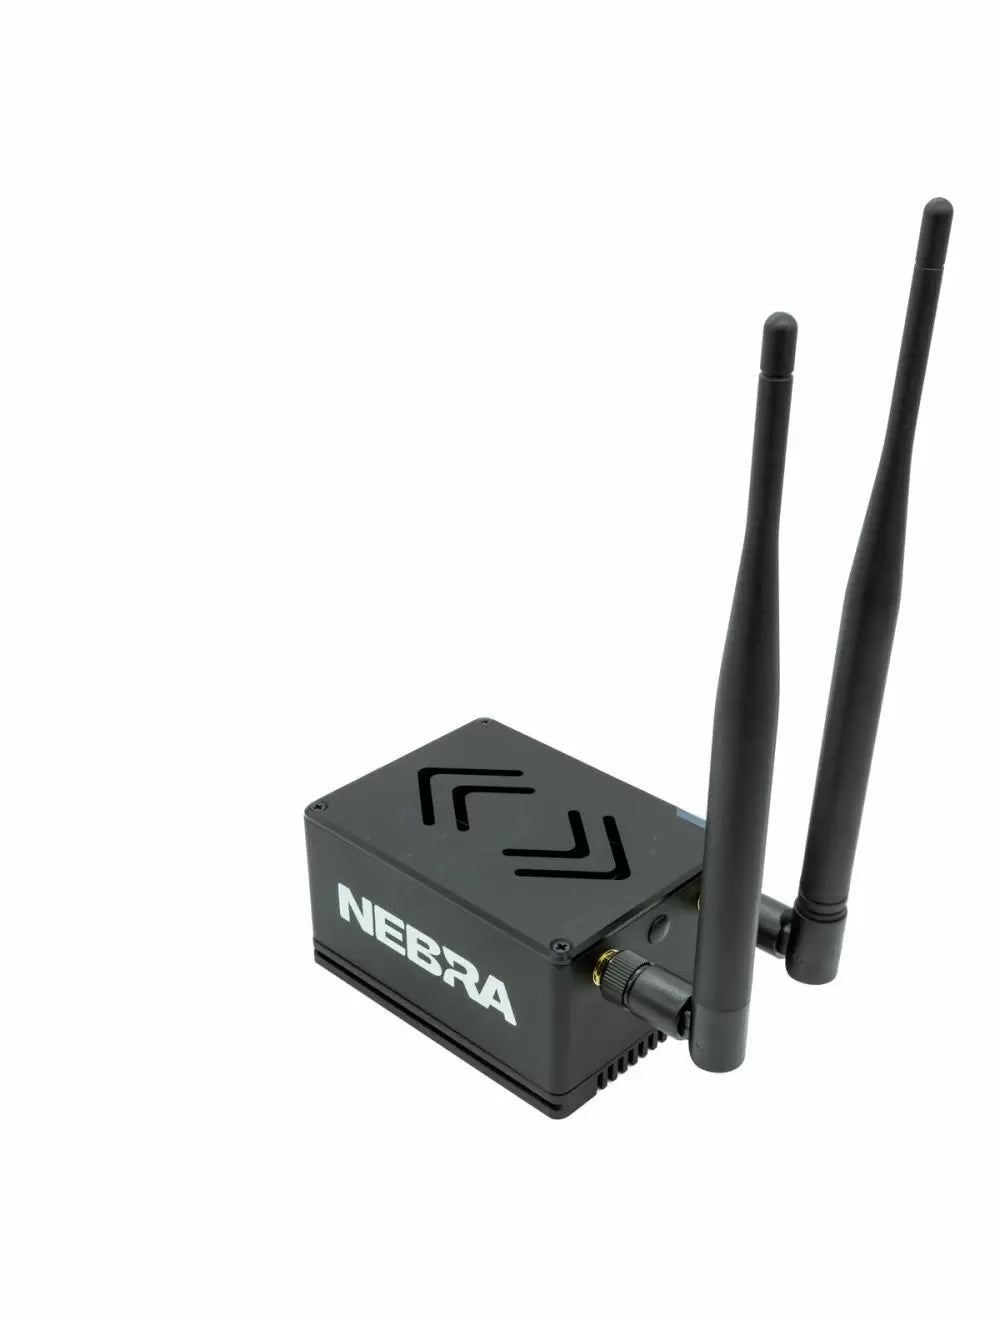 Nebra Indoor Helium Hotspot Crypto Miner